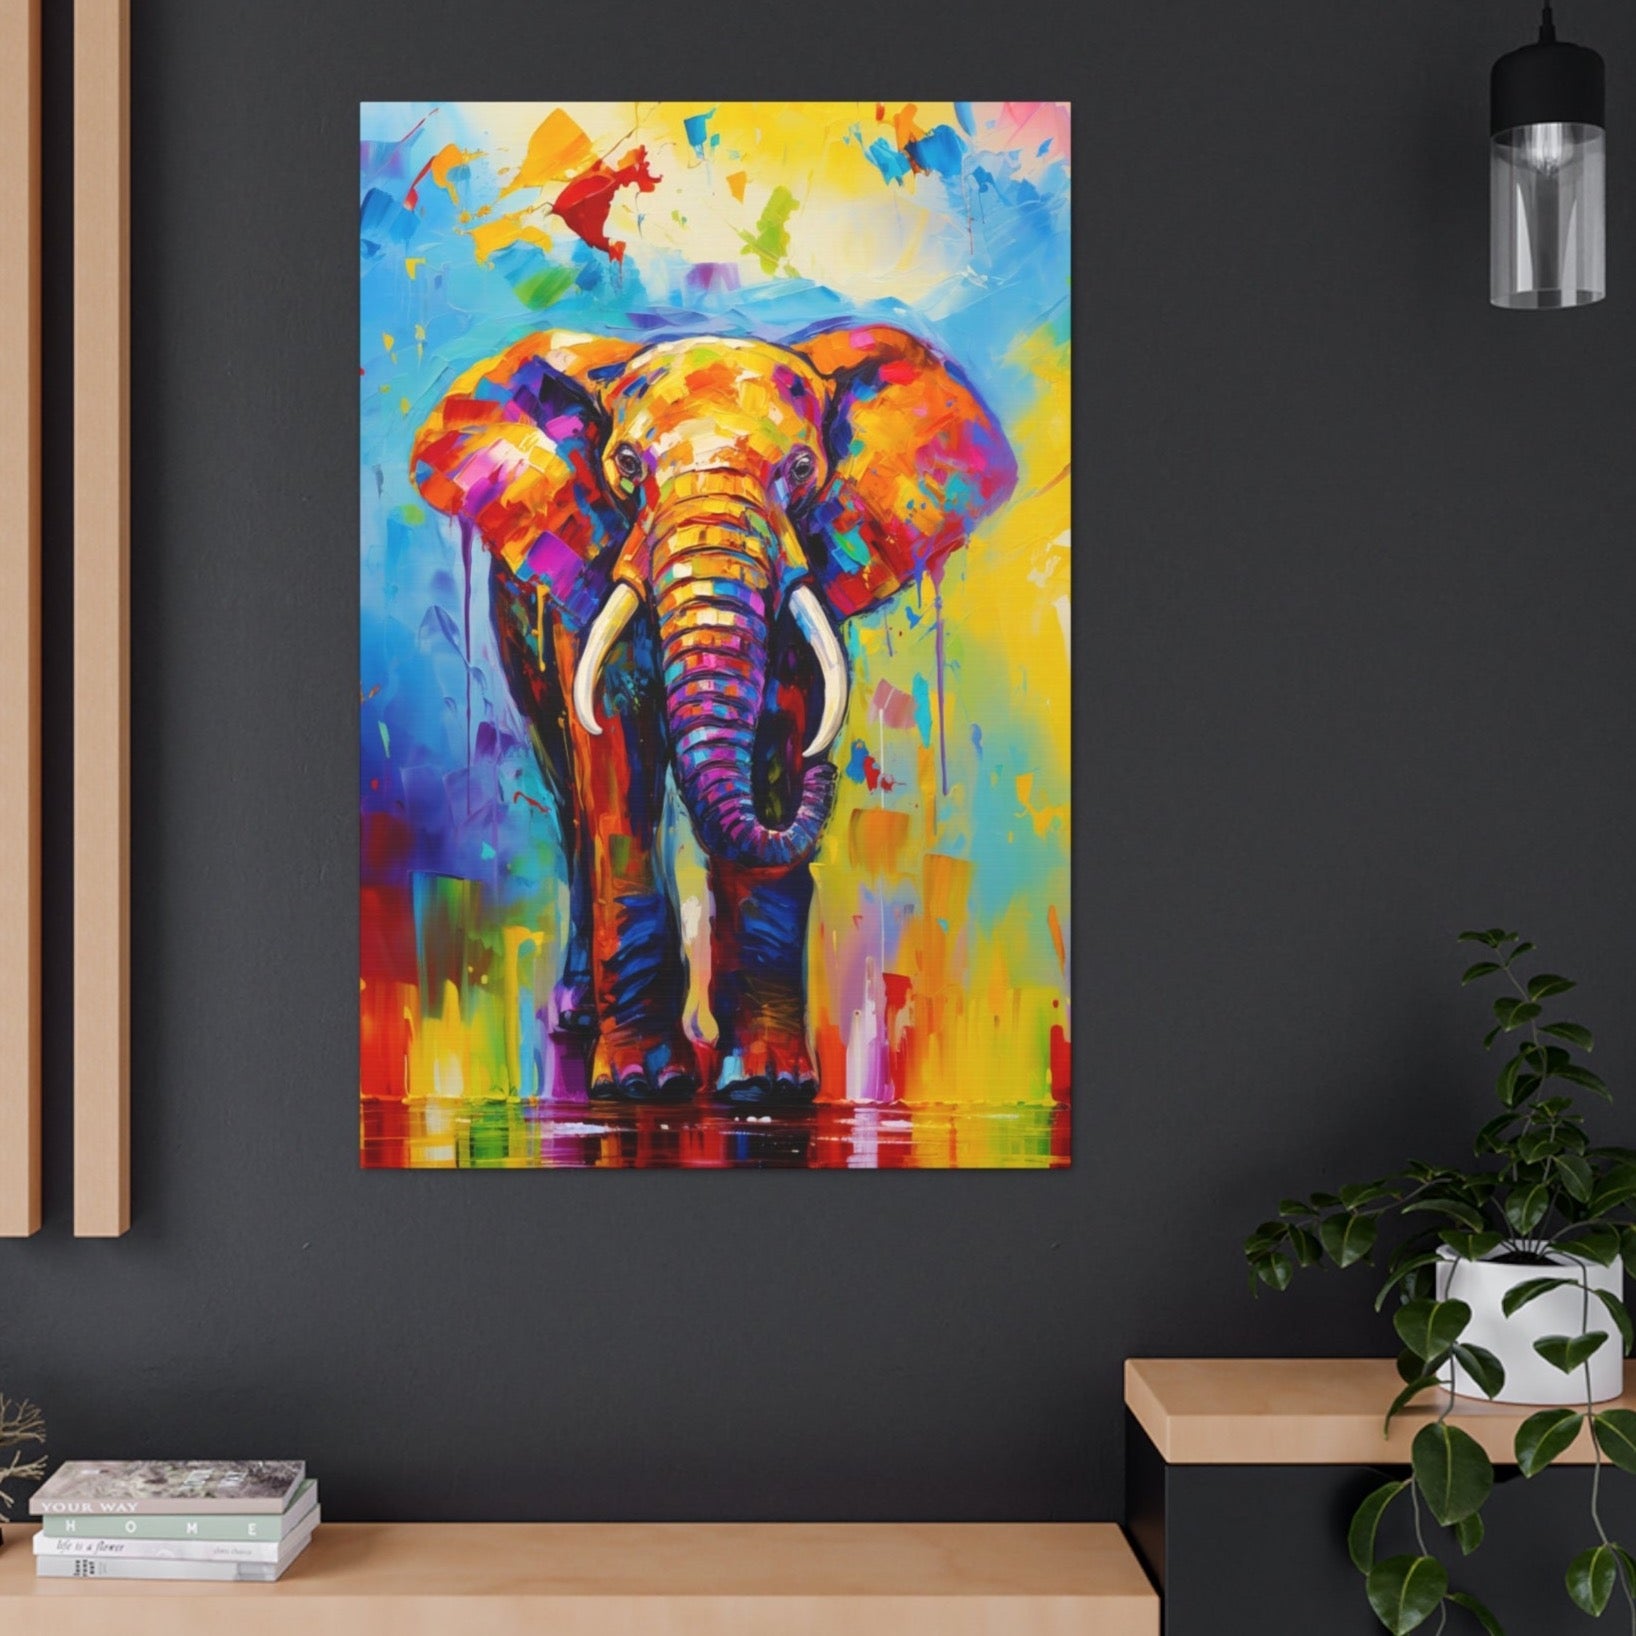 modern art elephant wall decor art